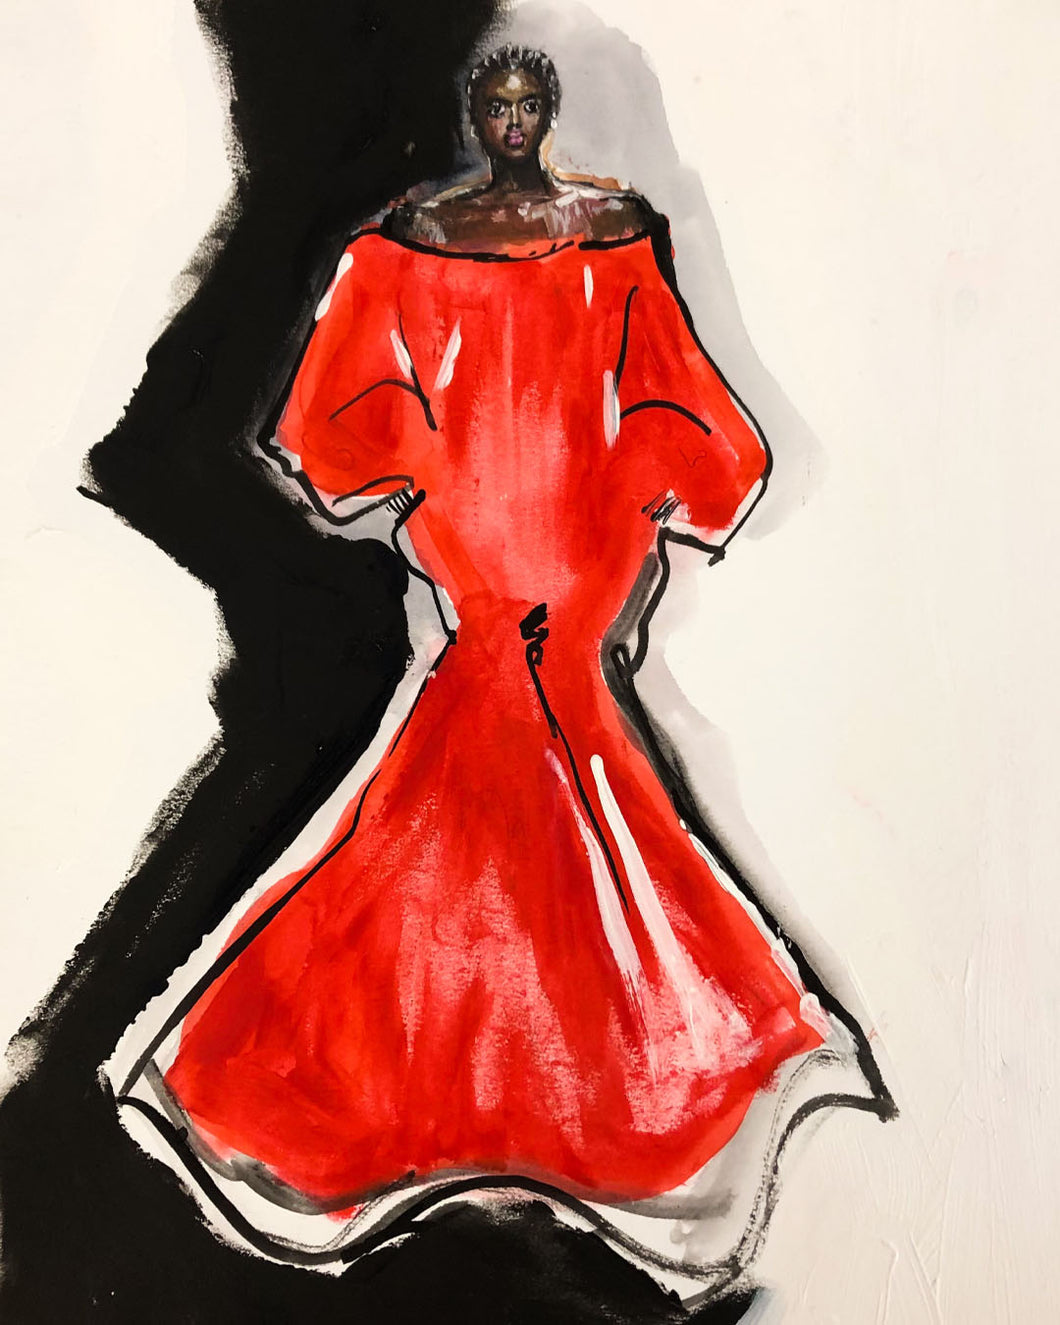 ALAIA -  S/F '22 red dress illustration